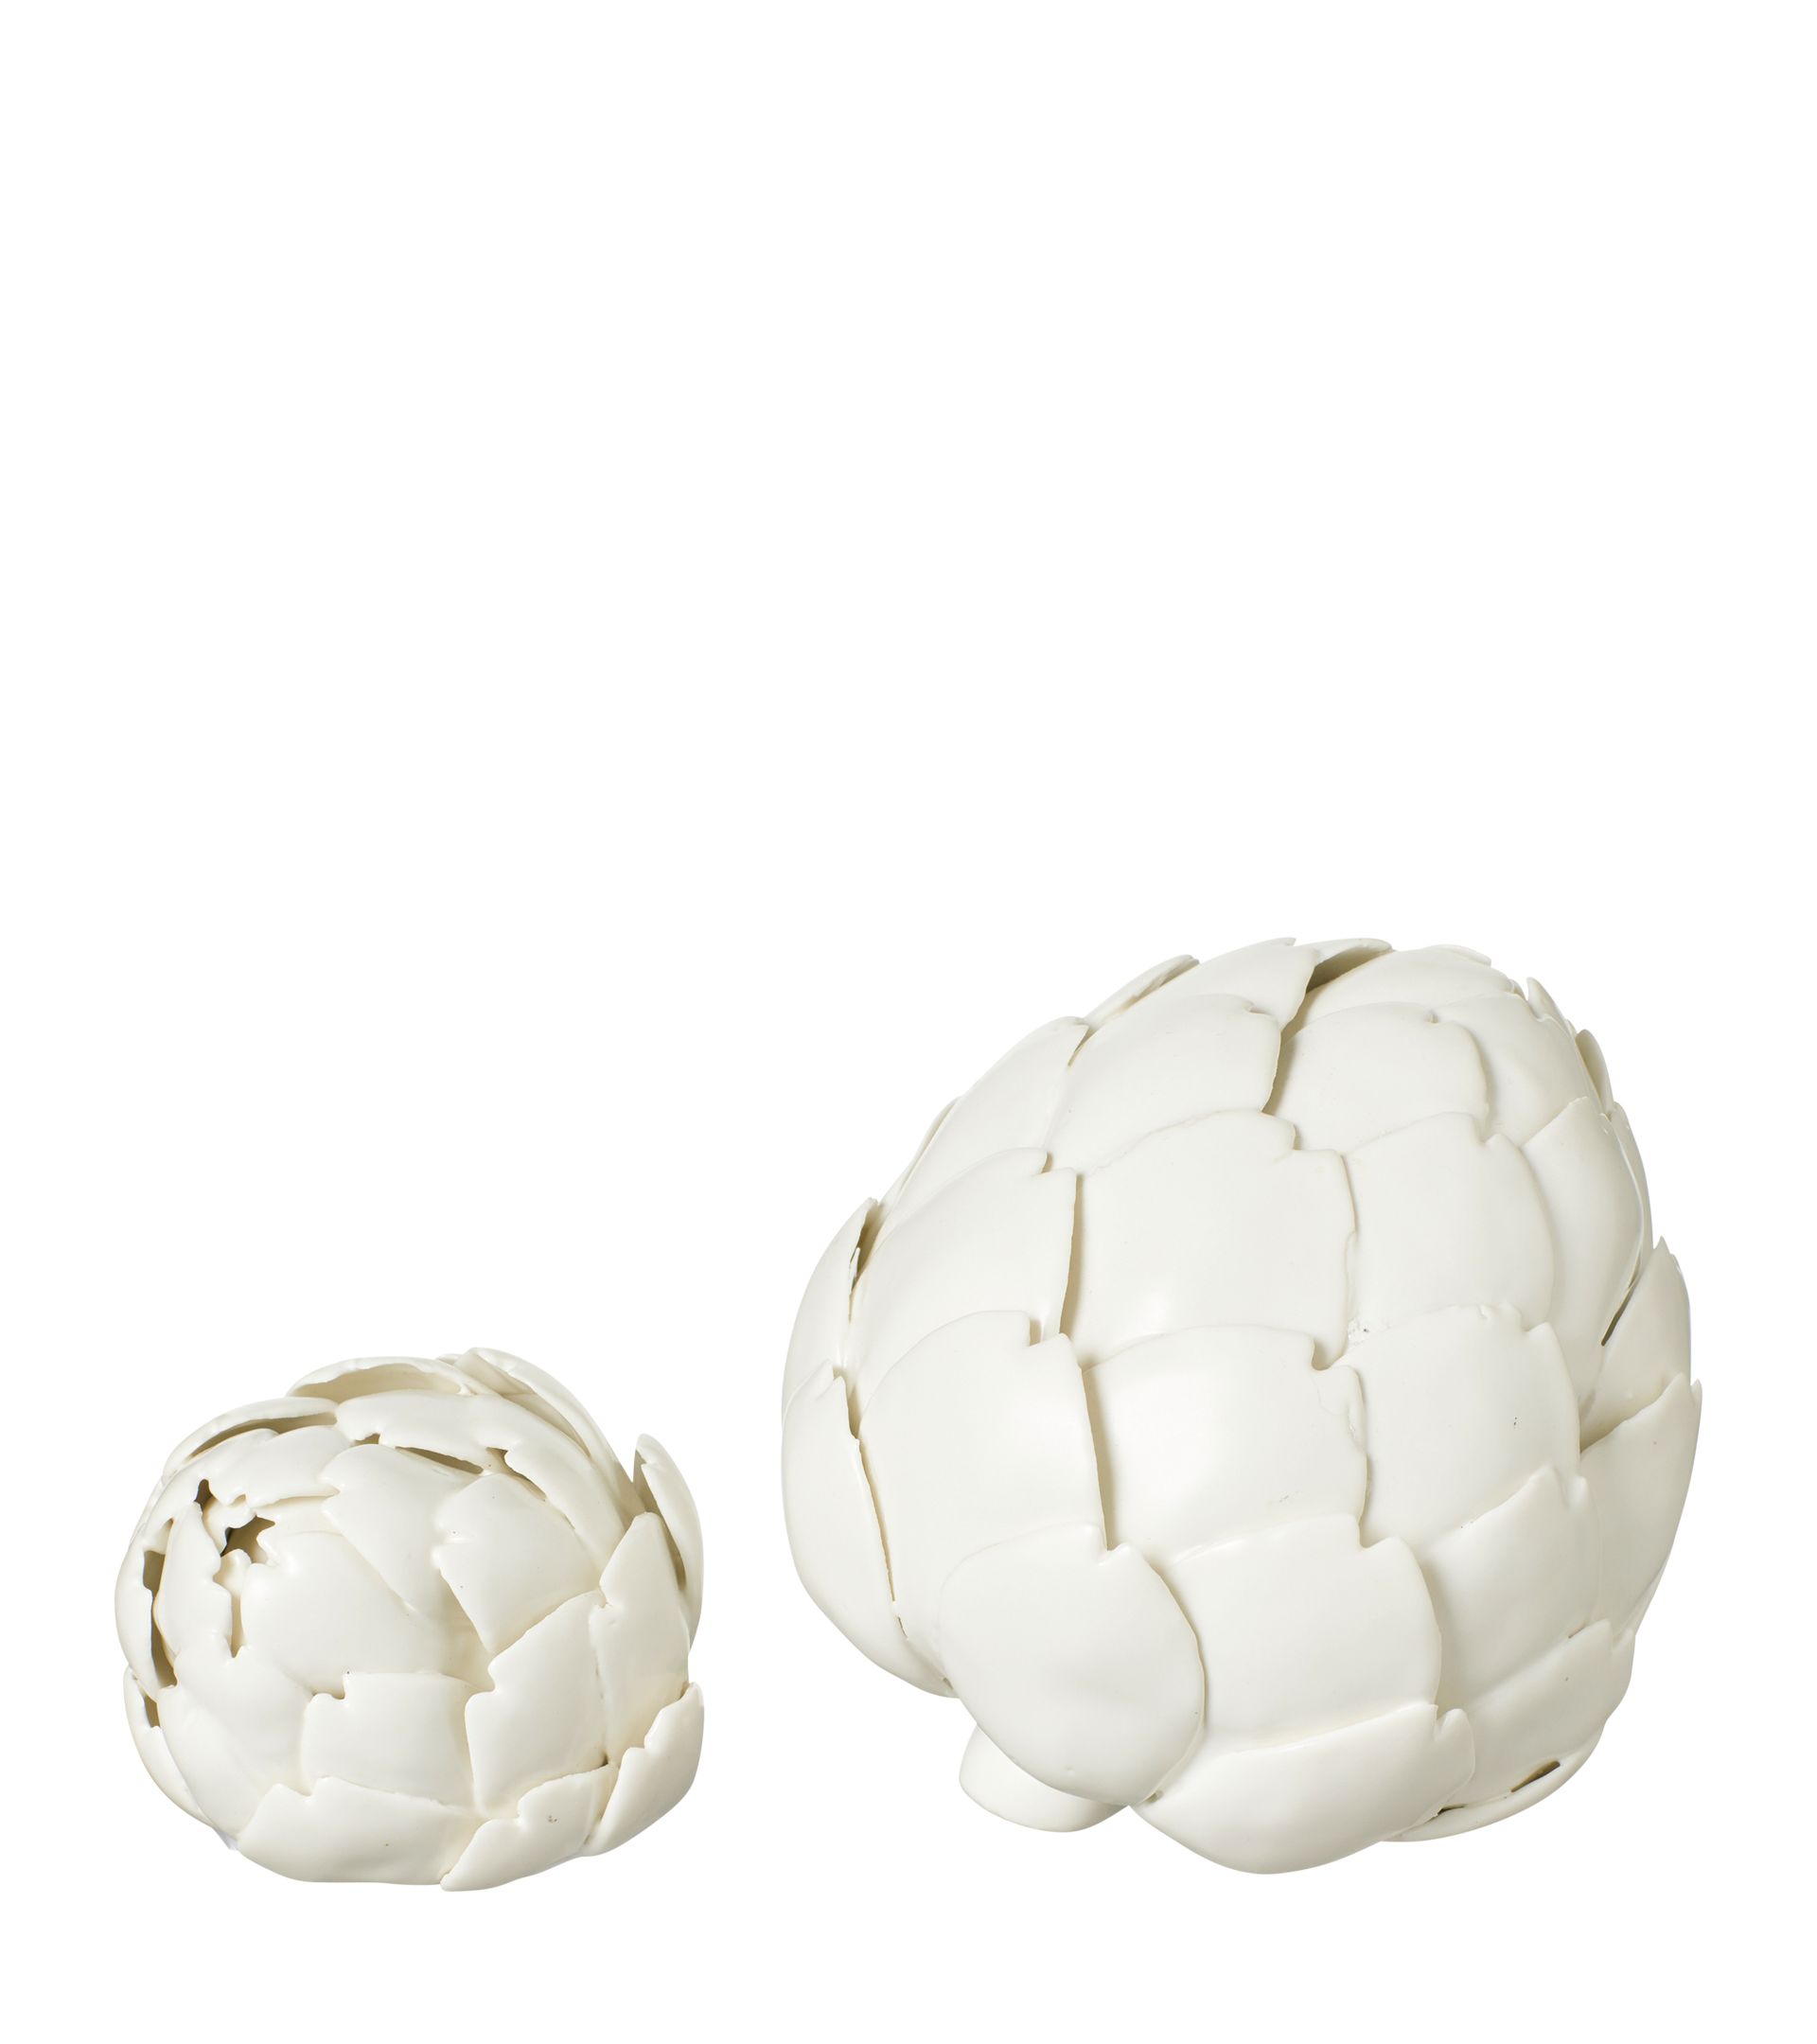 Pair of Porcelain Artichokes - White | OKA US